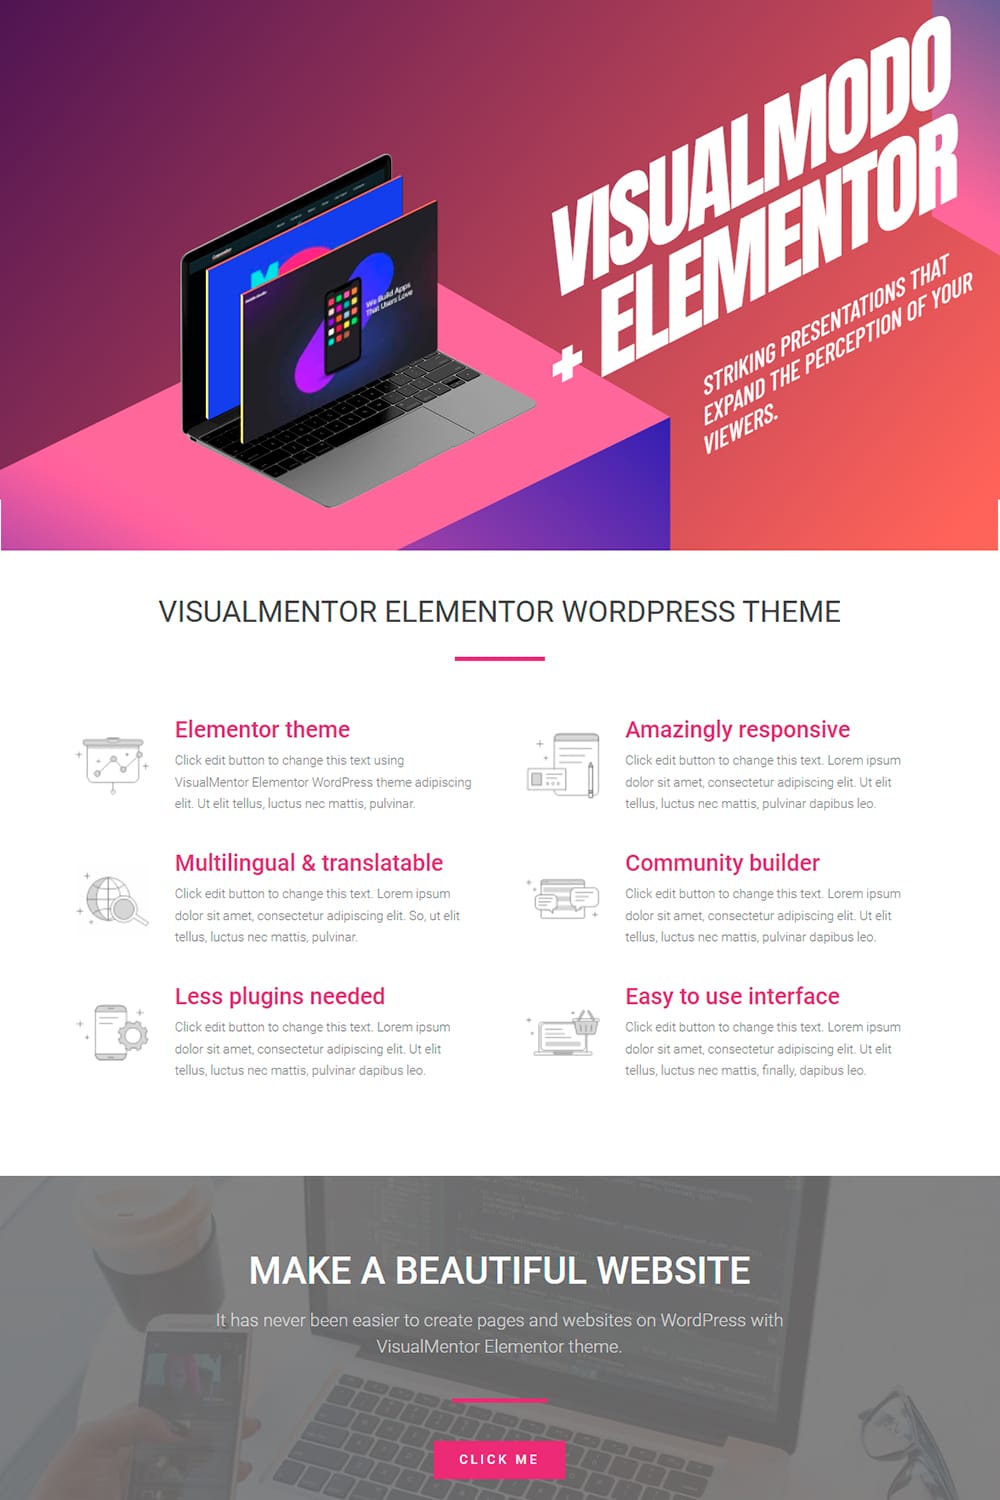 Premium elementor WordPress theme templates